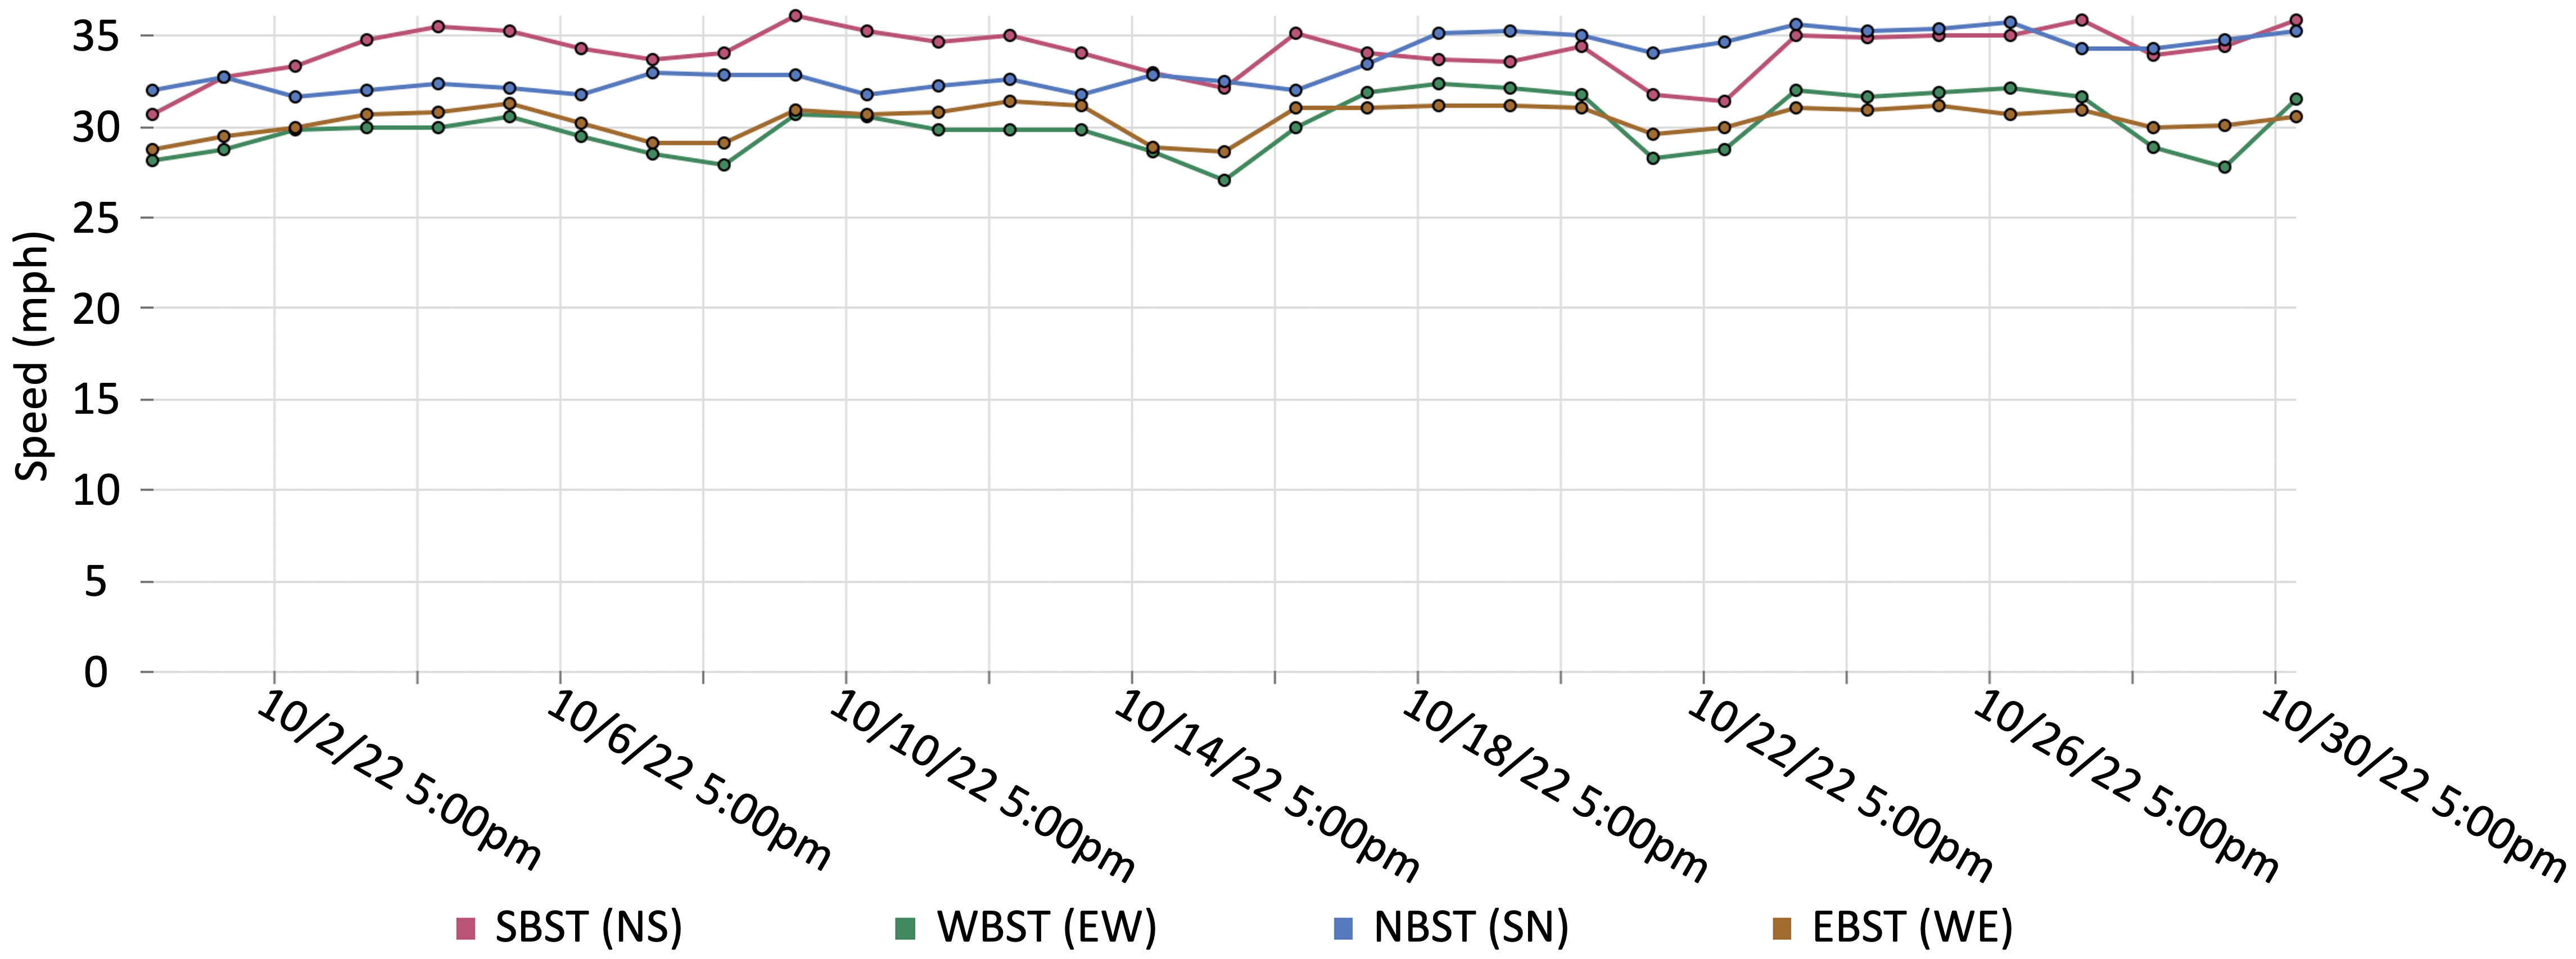 image of Traffic Speed sample data